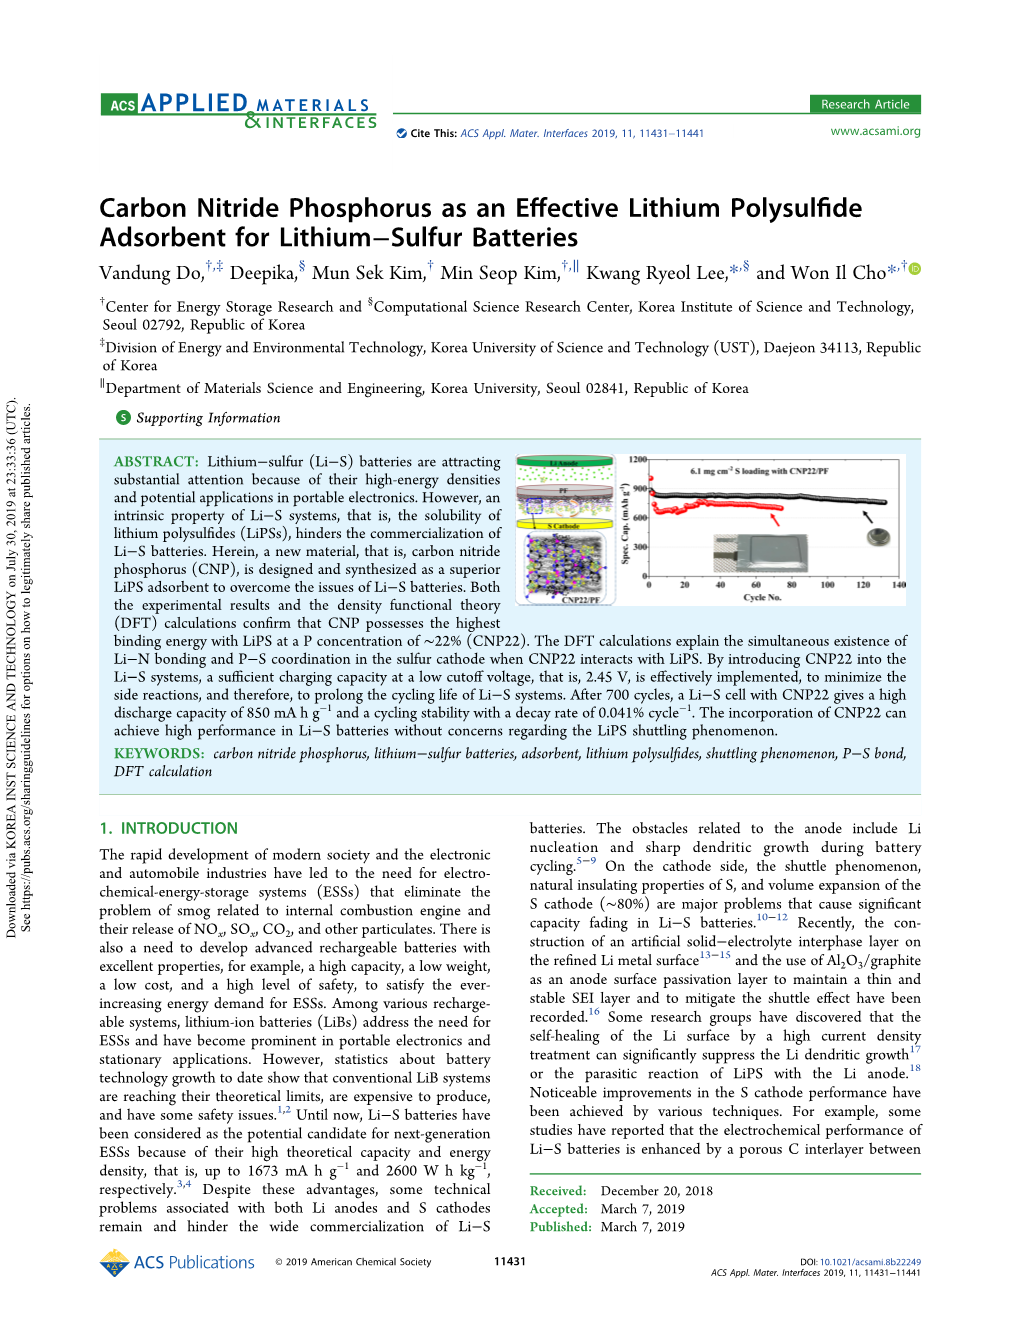 Carbon Nitride Phosphorus As an Effective Lithium Polysulfide